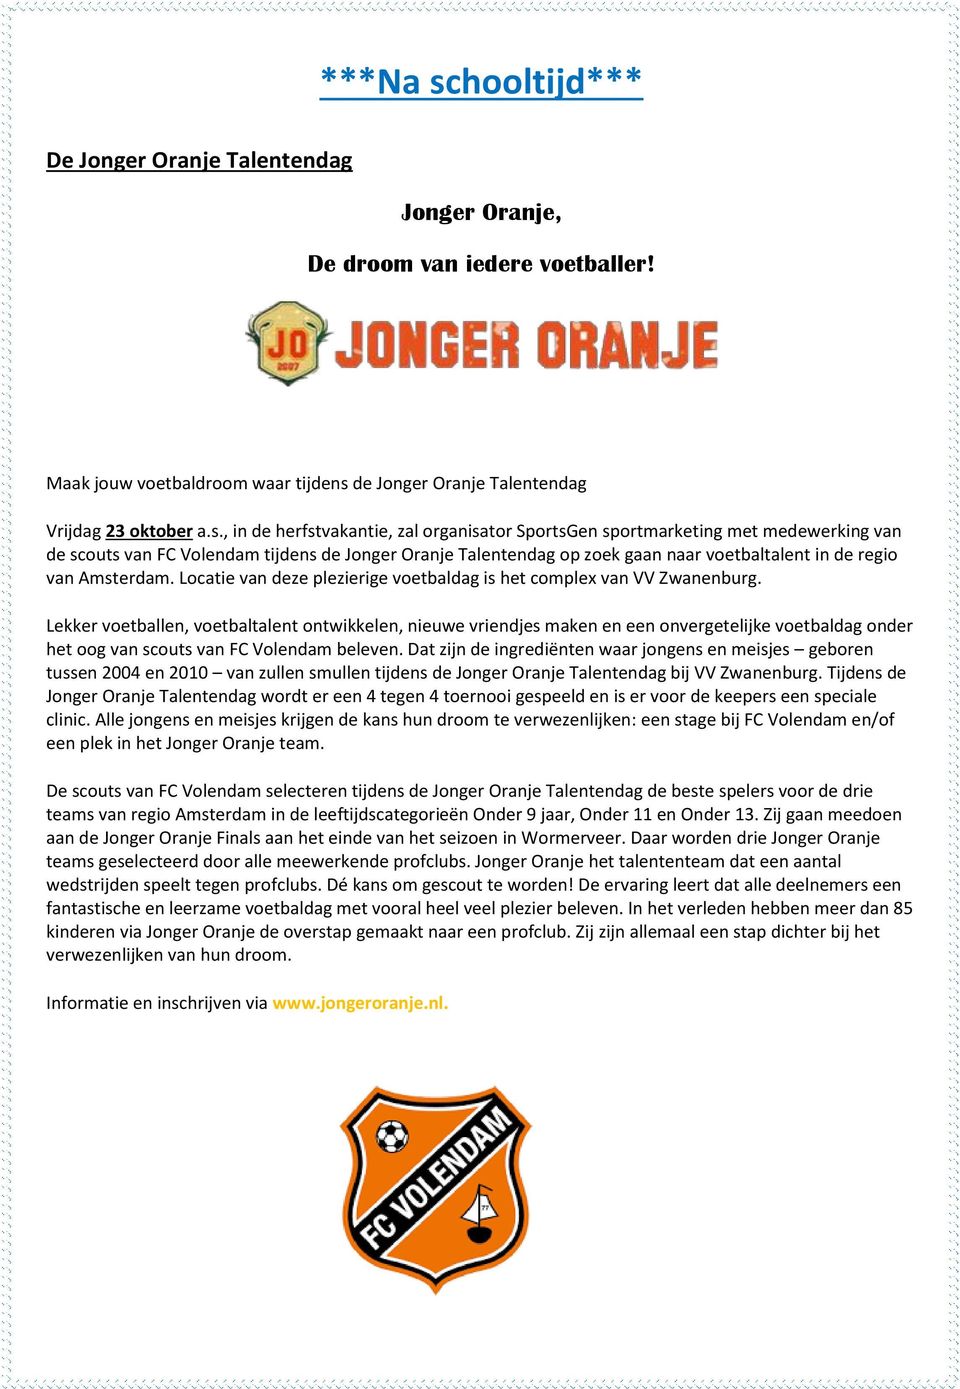 de Jonger Oranje Talentendag Vrijdag 23 oktober a.s.